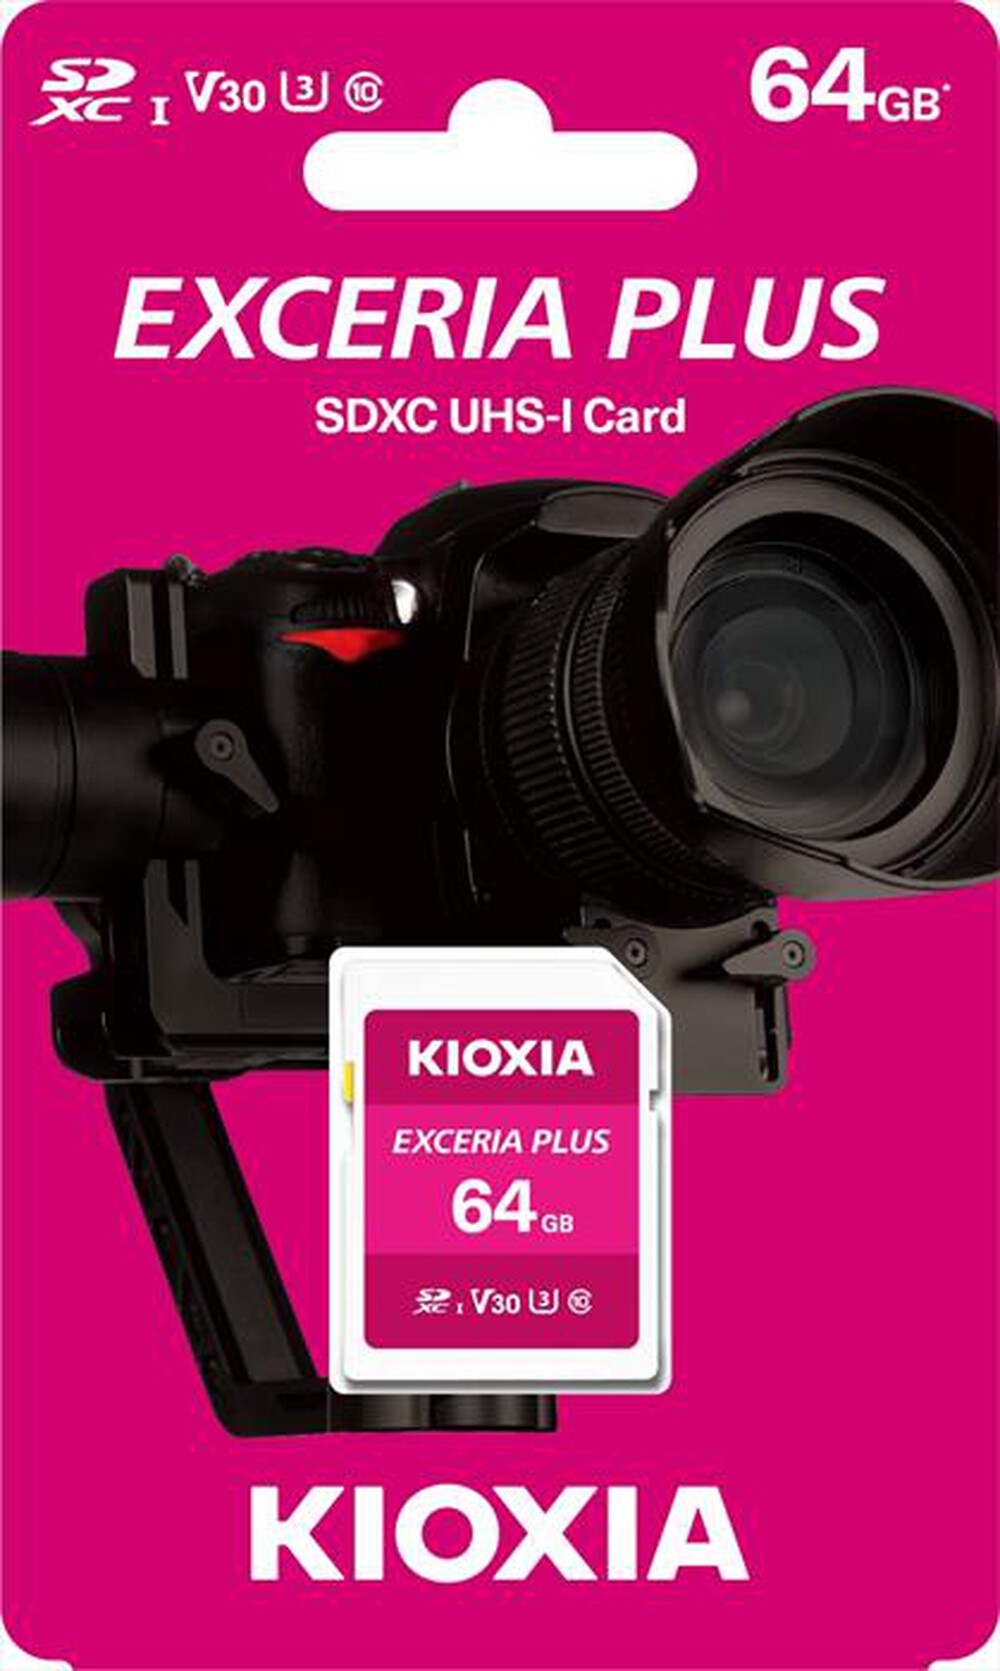 "KIOXIA - SD EXCERIA PLUS NPL1 UHS-1 64GB-Rosa"